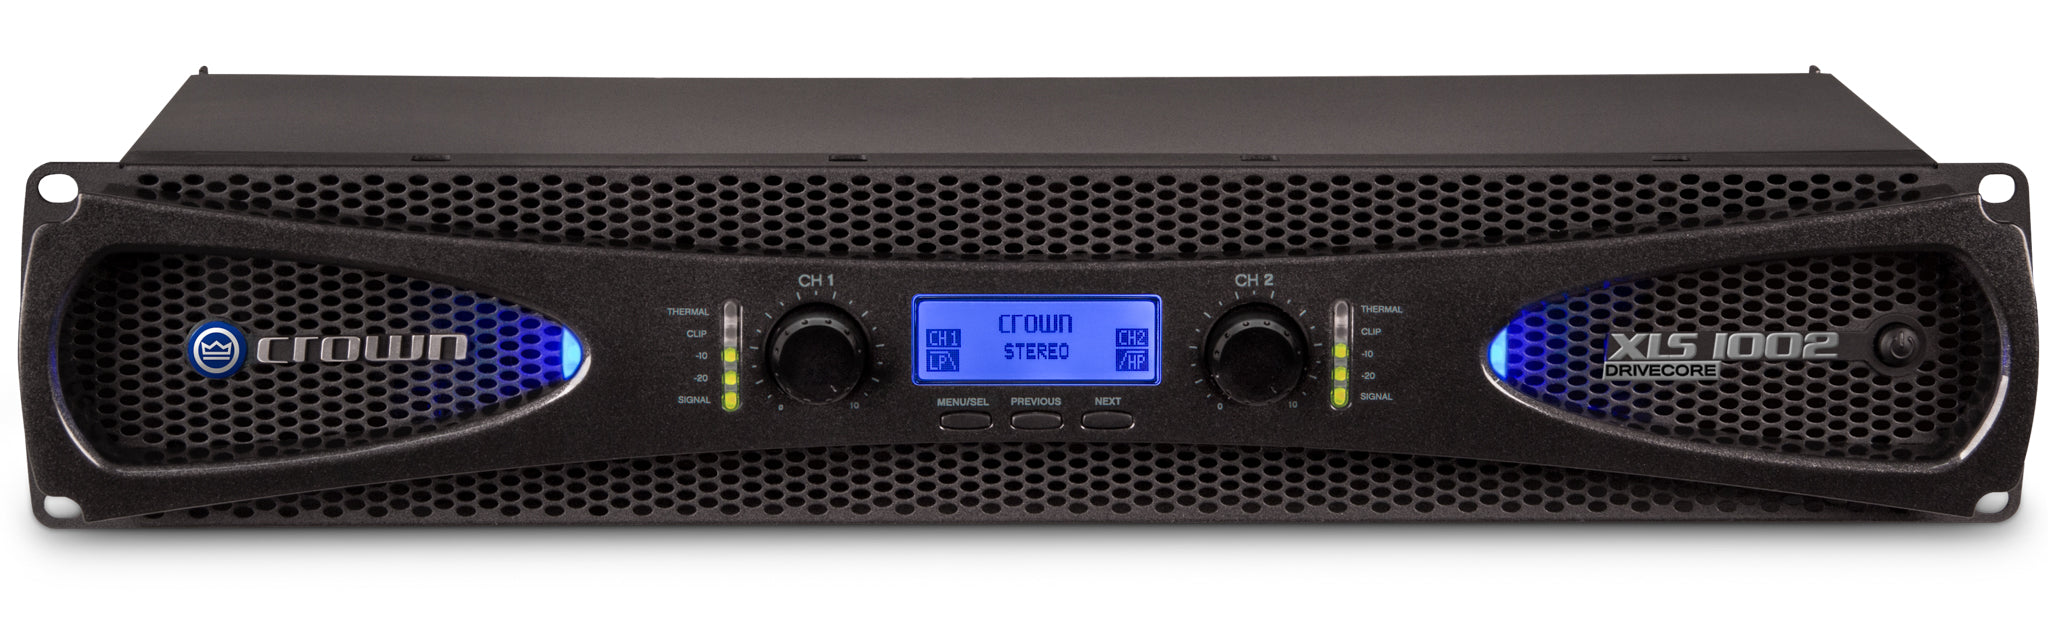 Crown XLS1002 Power Amplifier 350W @ 4ohms Dual Channel Built-in Processing